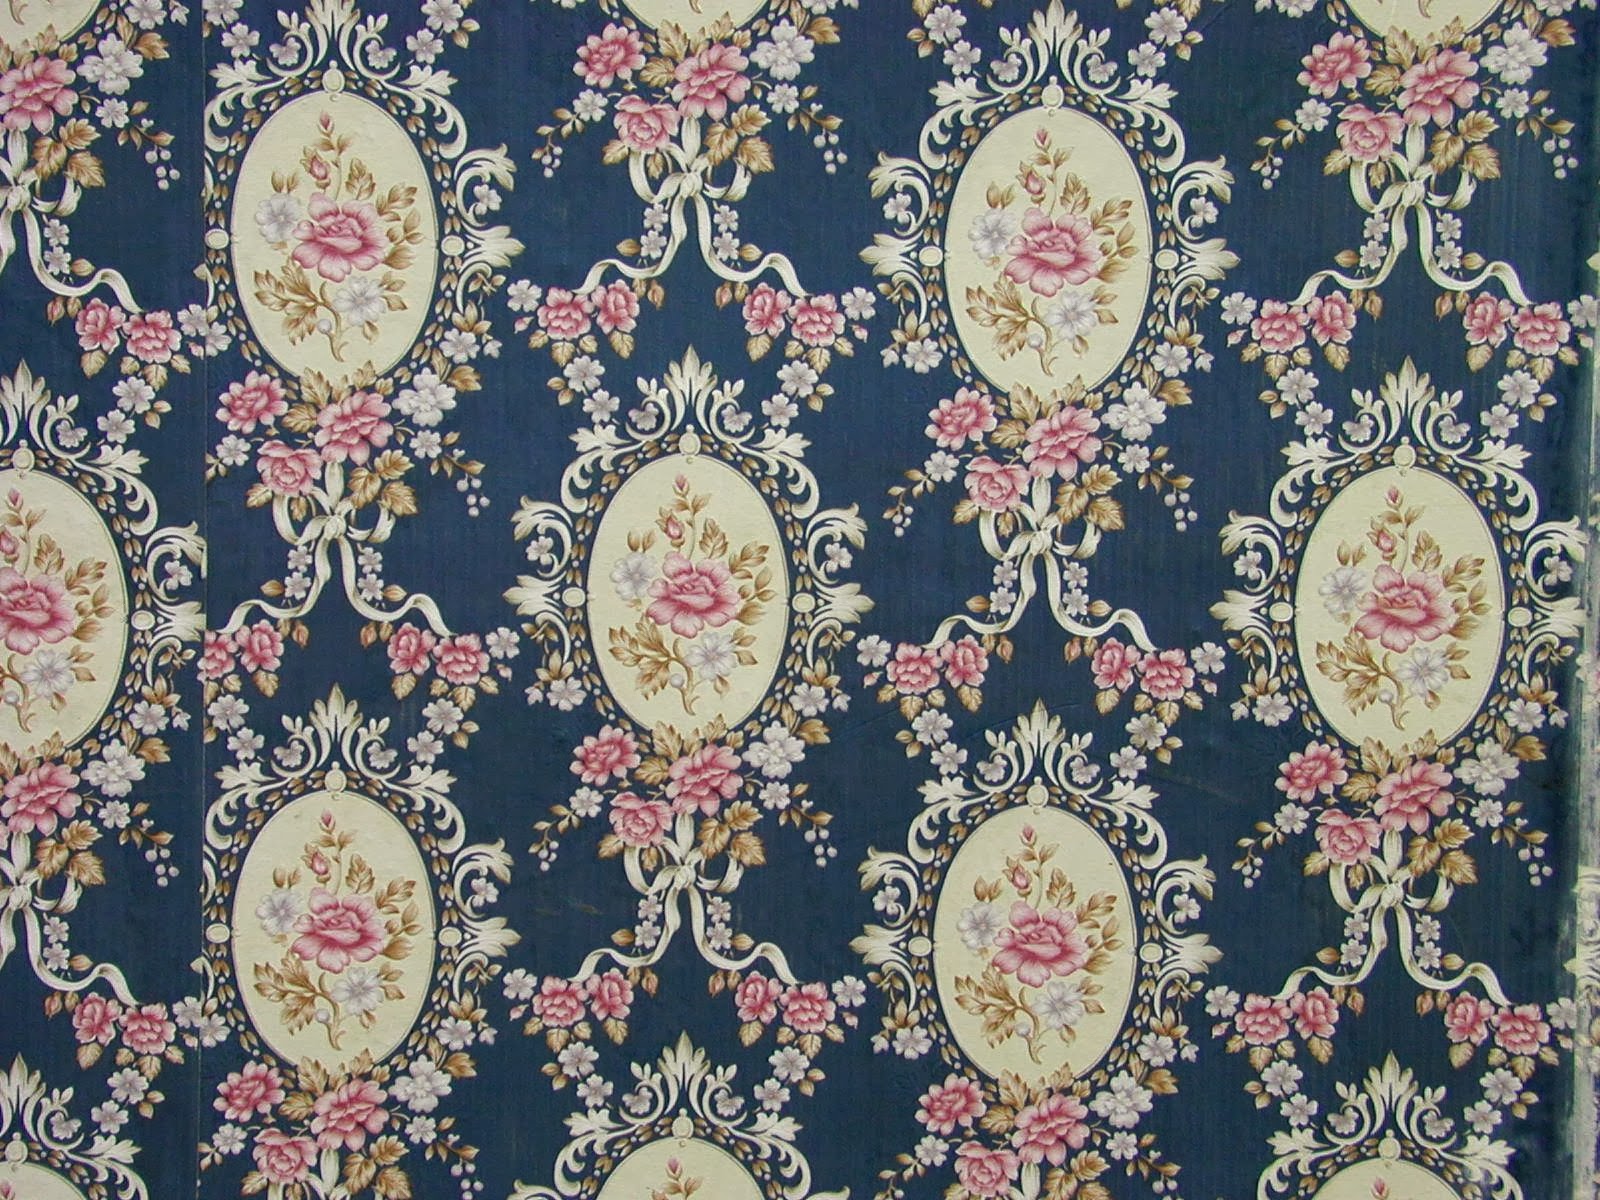 edwardian wallpaper,pattern,textile,visual arts,design,motif